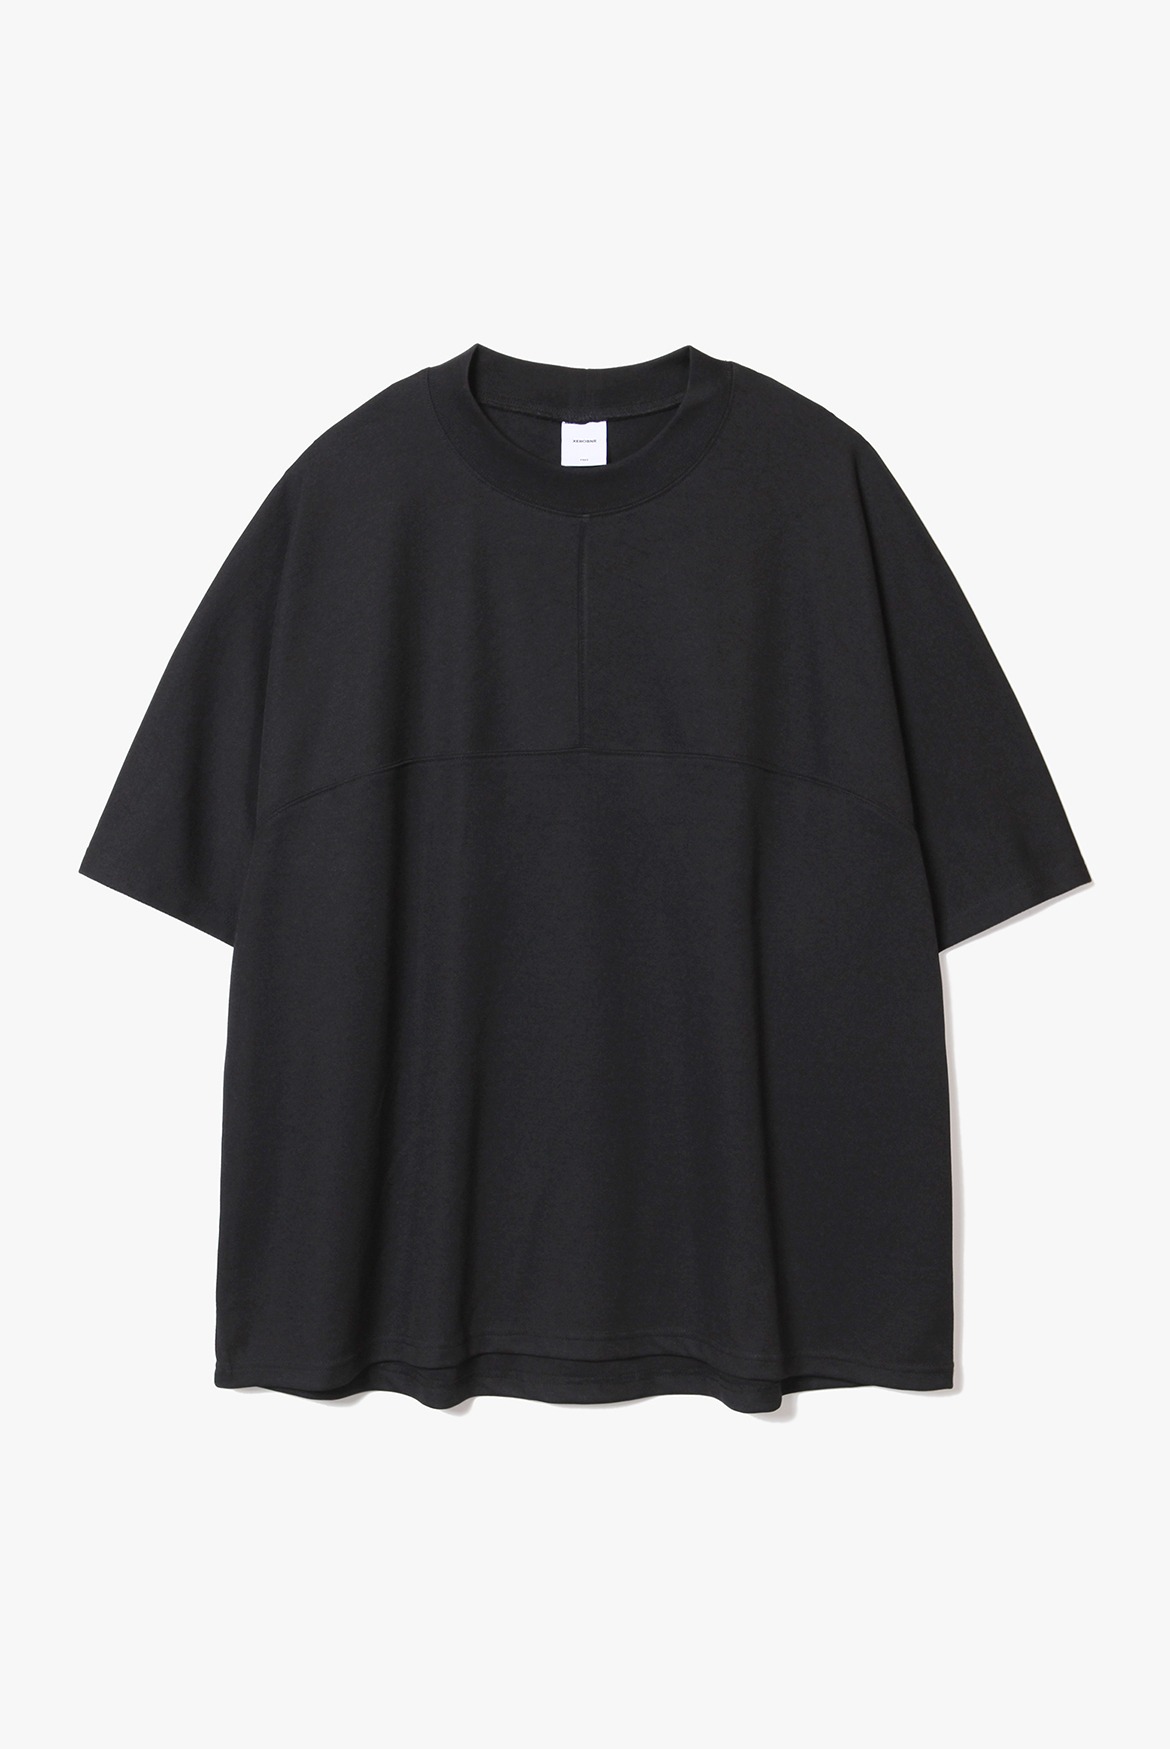 Dolman Sleeve T-Shirts [Black]